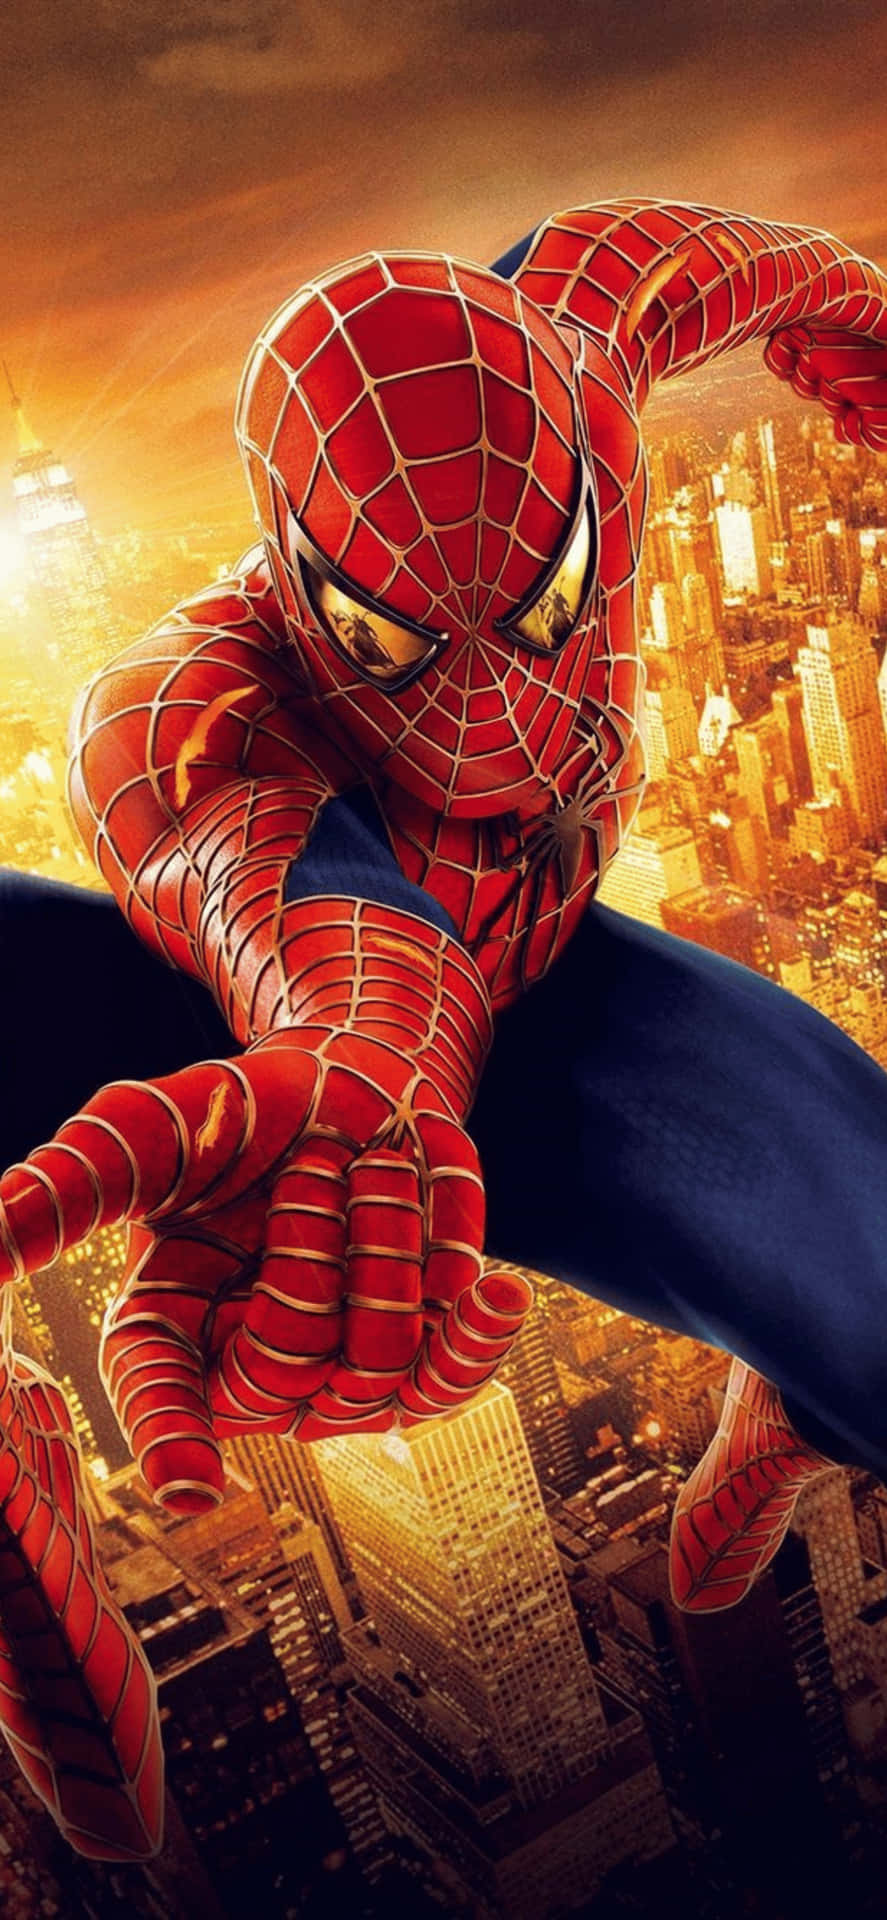 Thrilling Marvel Superheroes Battle Scene Rendered for iPhone XS Max Wallpaper